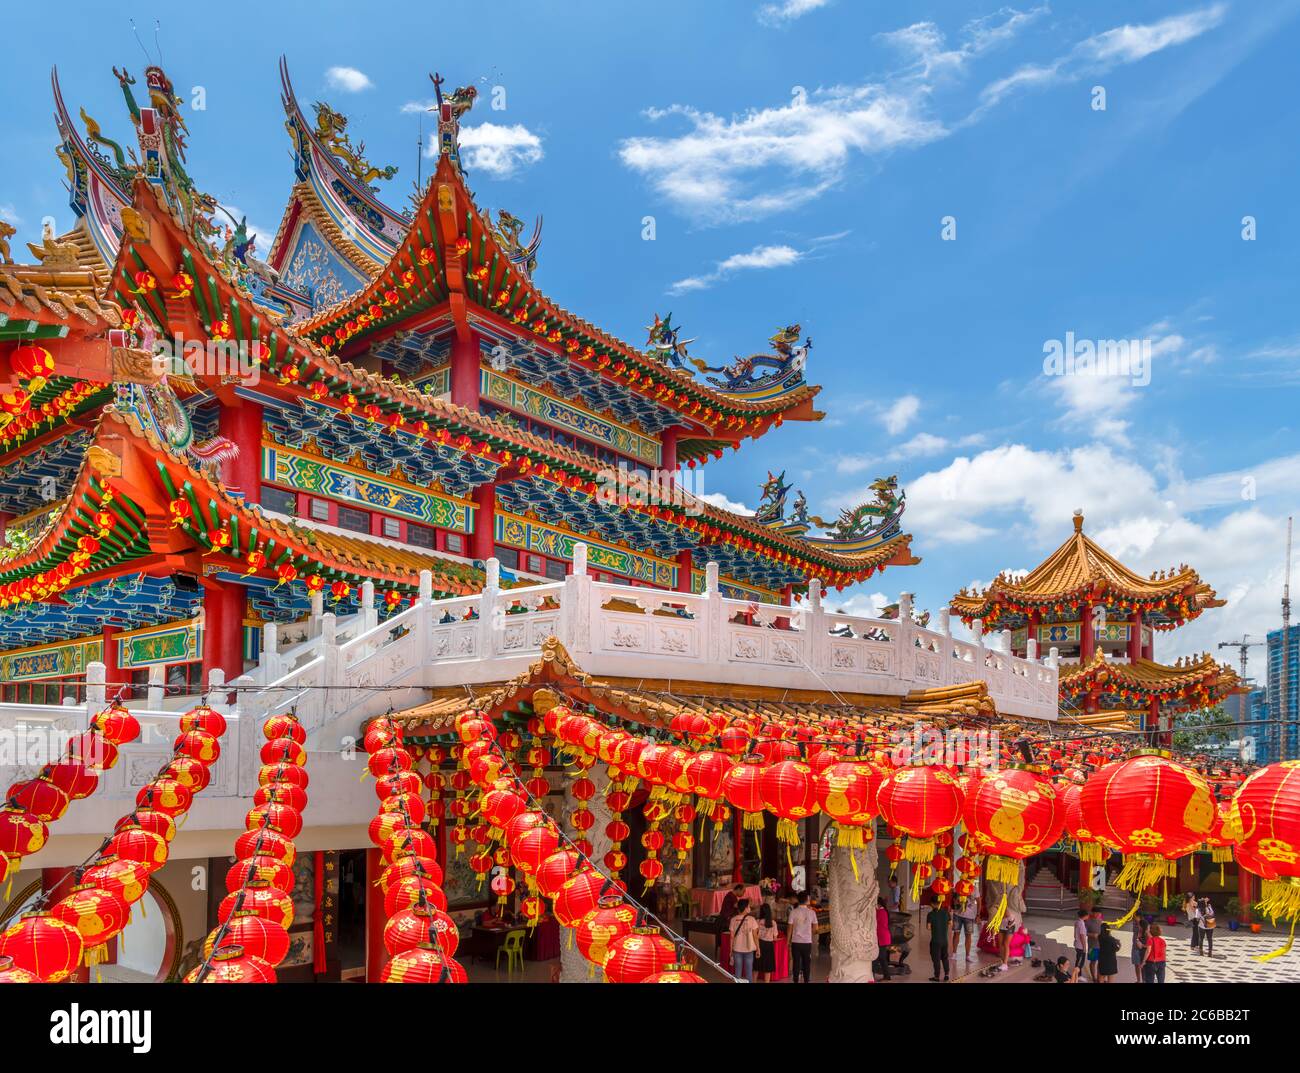 Thean Hou Temple, a large Chinese temple in Kuala Lumpur, Malaysia Stock Photo